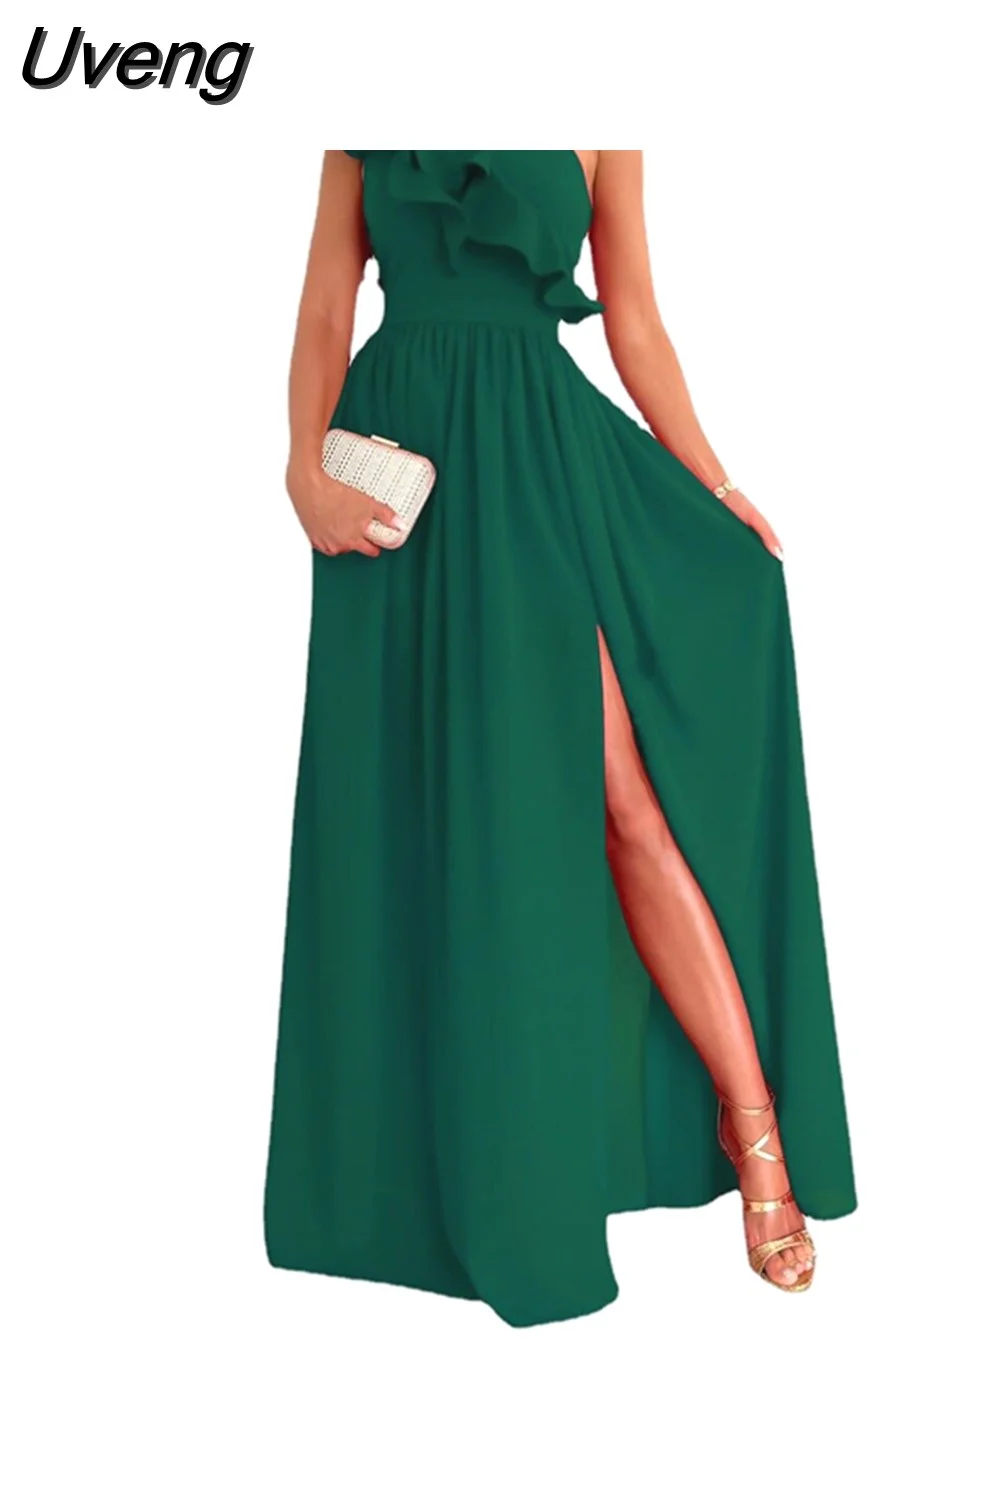 Uveng Sexy Fashion Sleeveless Off Shoulder Slash Neck Ruffles Slit Maxi Dresses Grace Waist Evening Dresse Vestidos De Fiesta 420-0